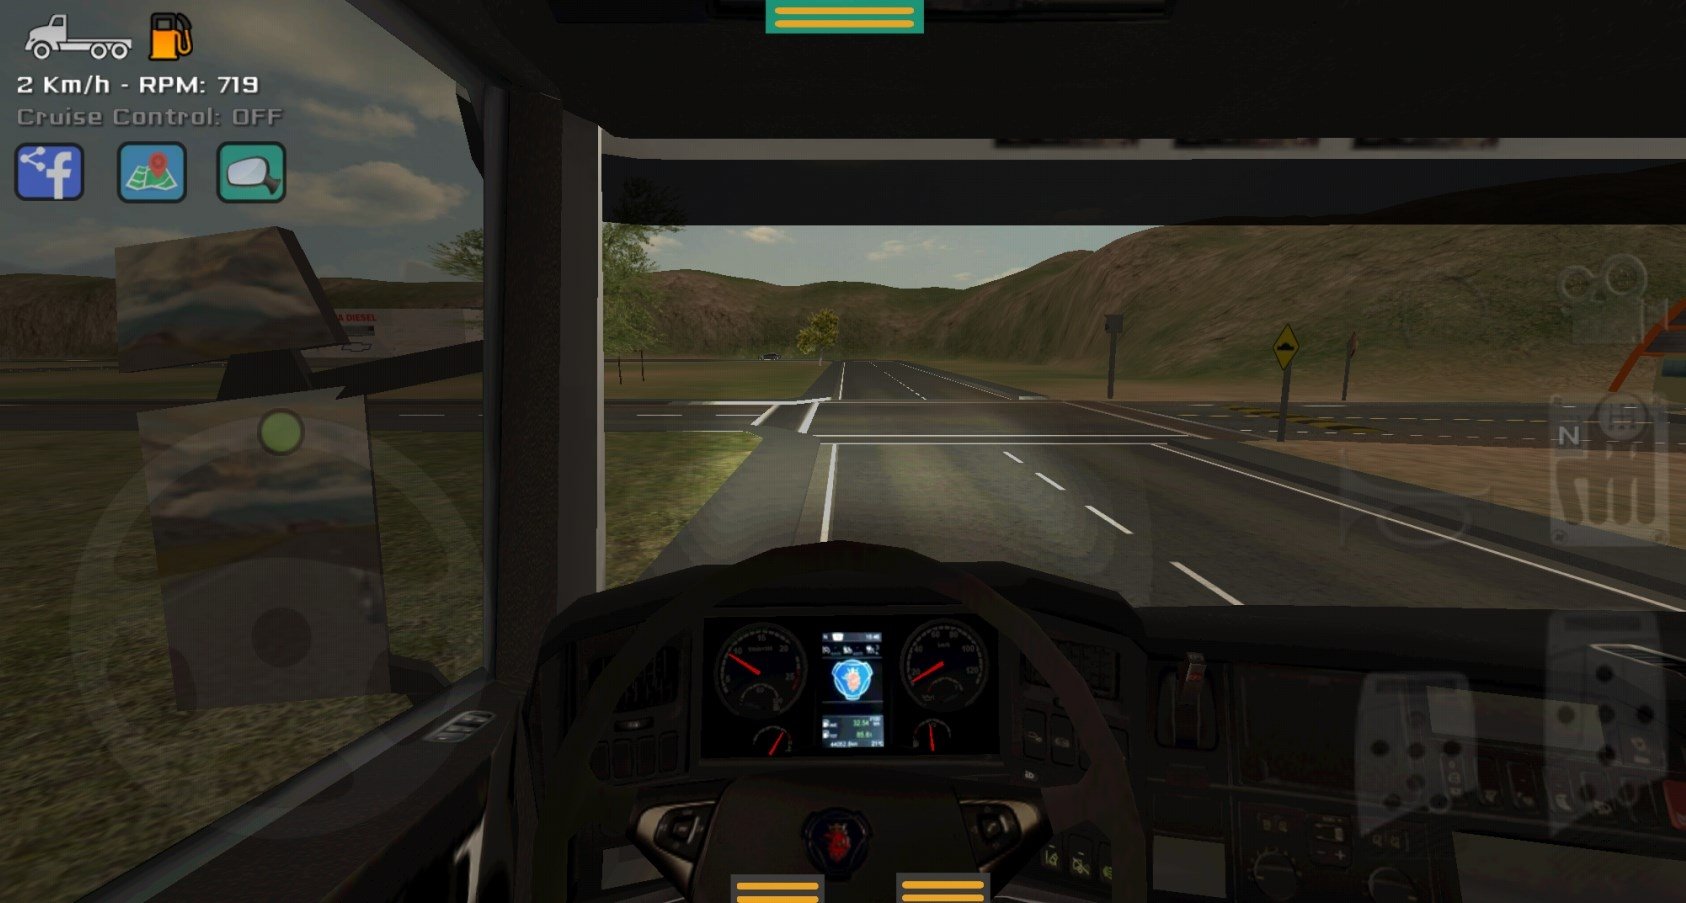 descargar grand truck simulator 2 para android